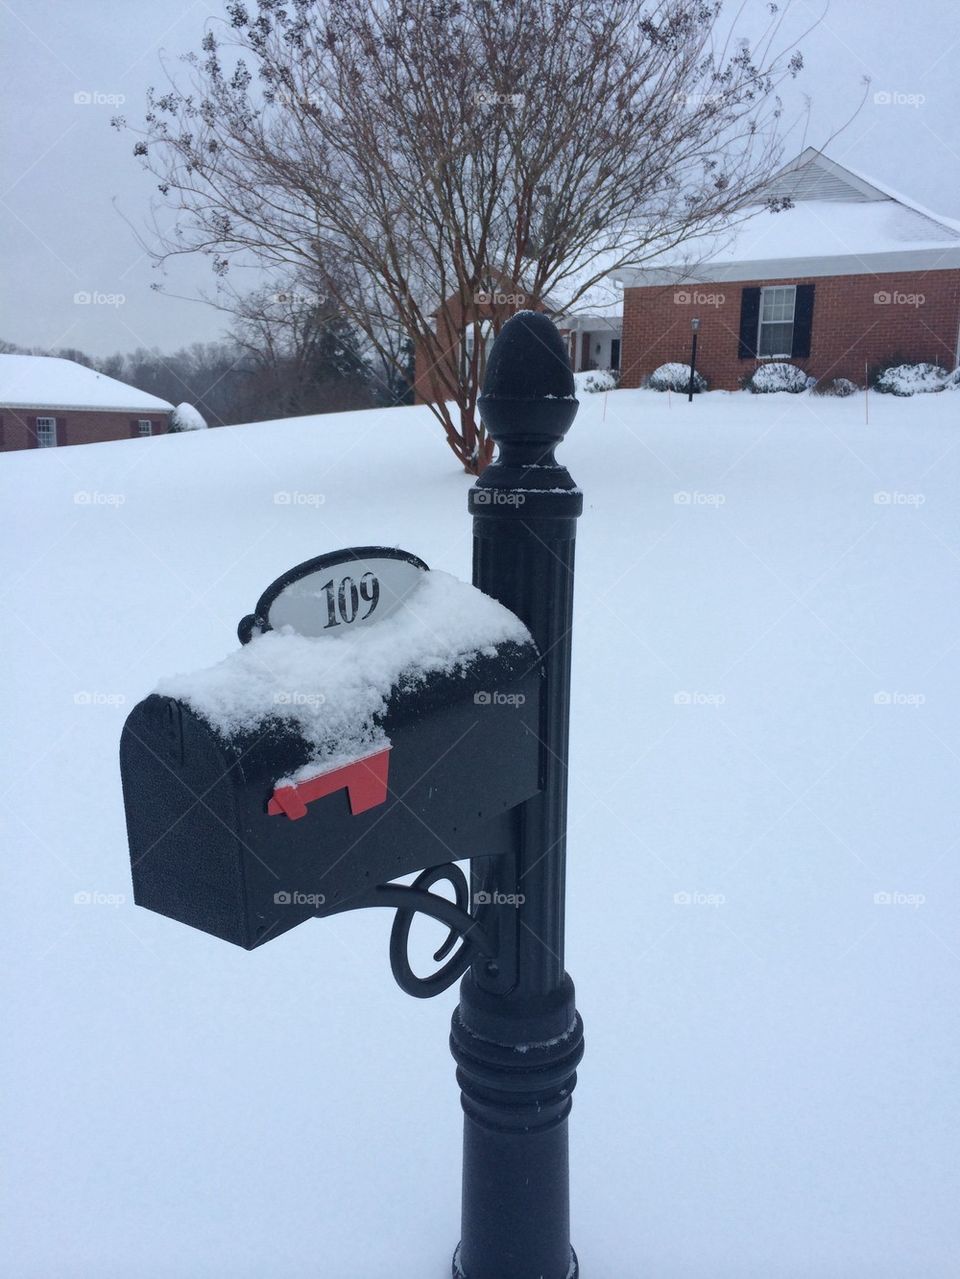 Snow on the mailbox